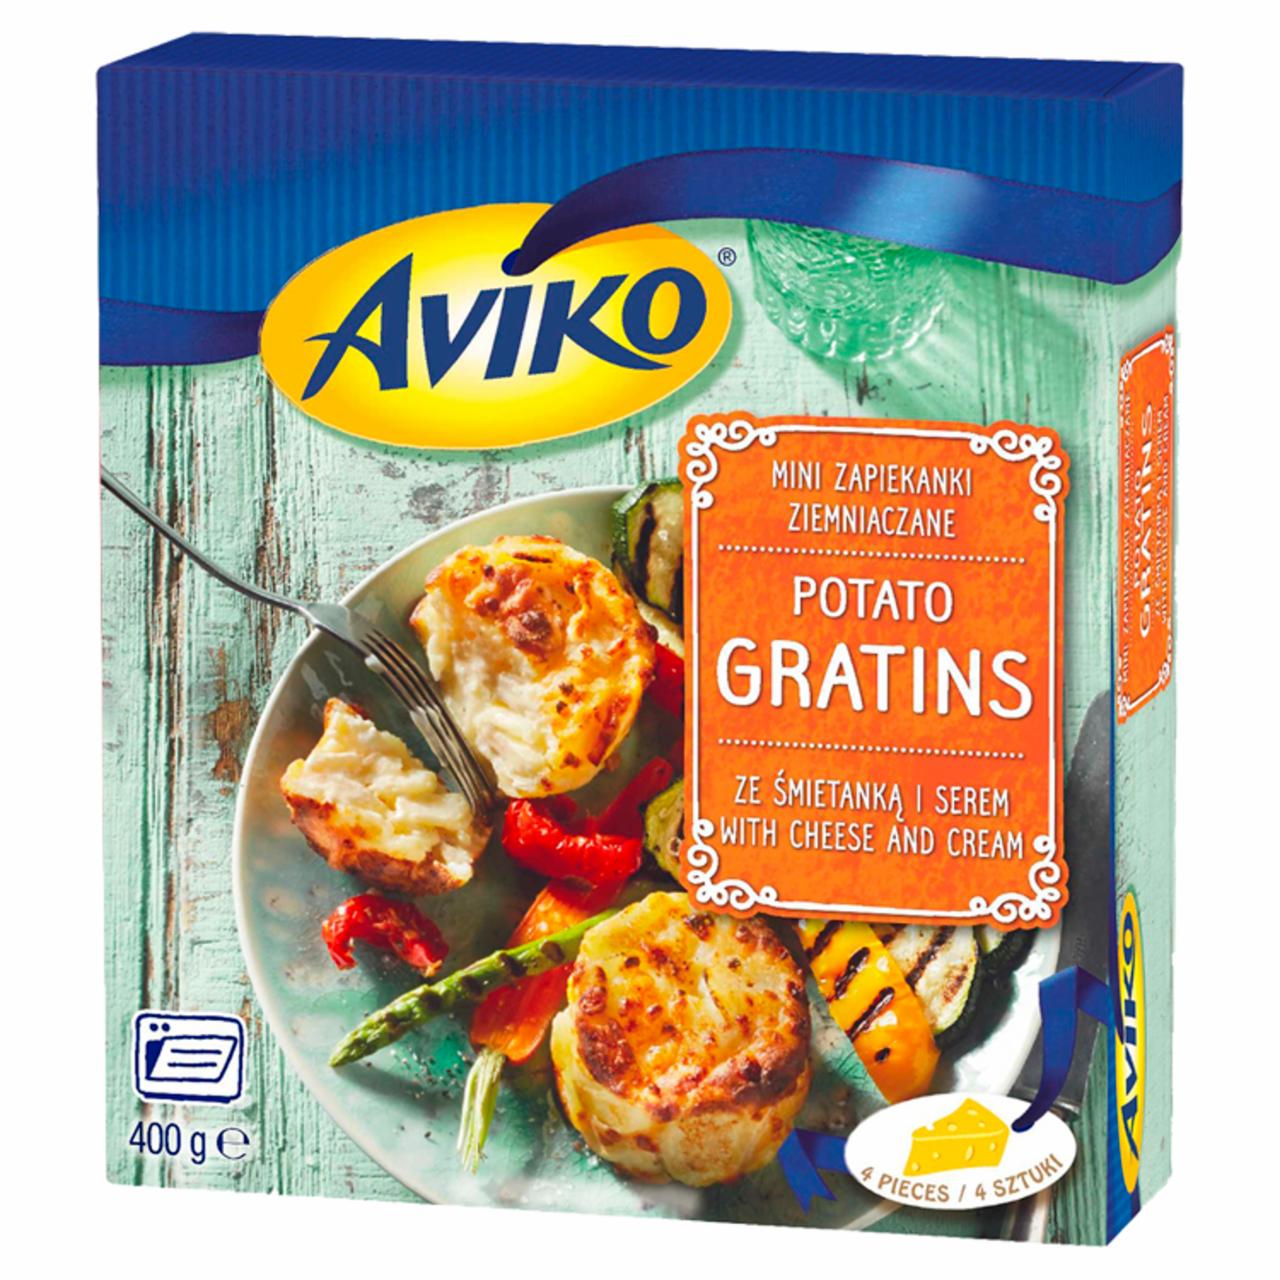 Fotografie - Potato Gratins with Cheese and Cream Aviko